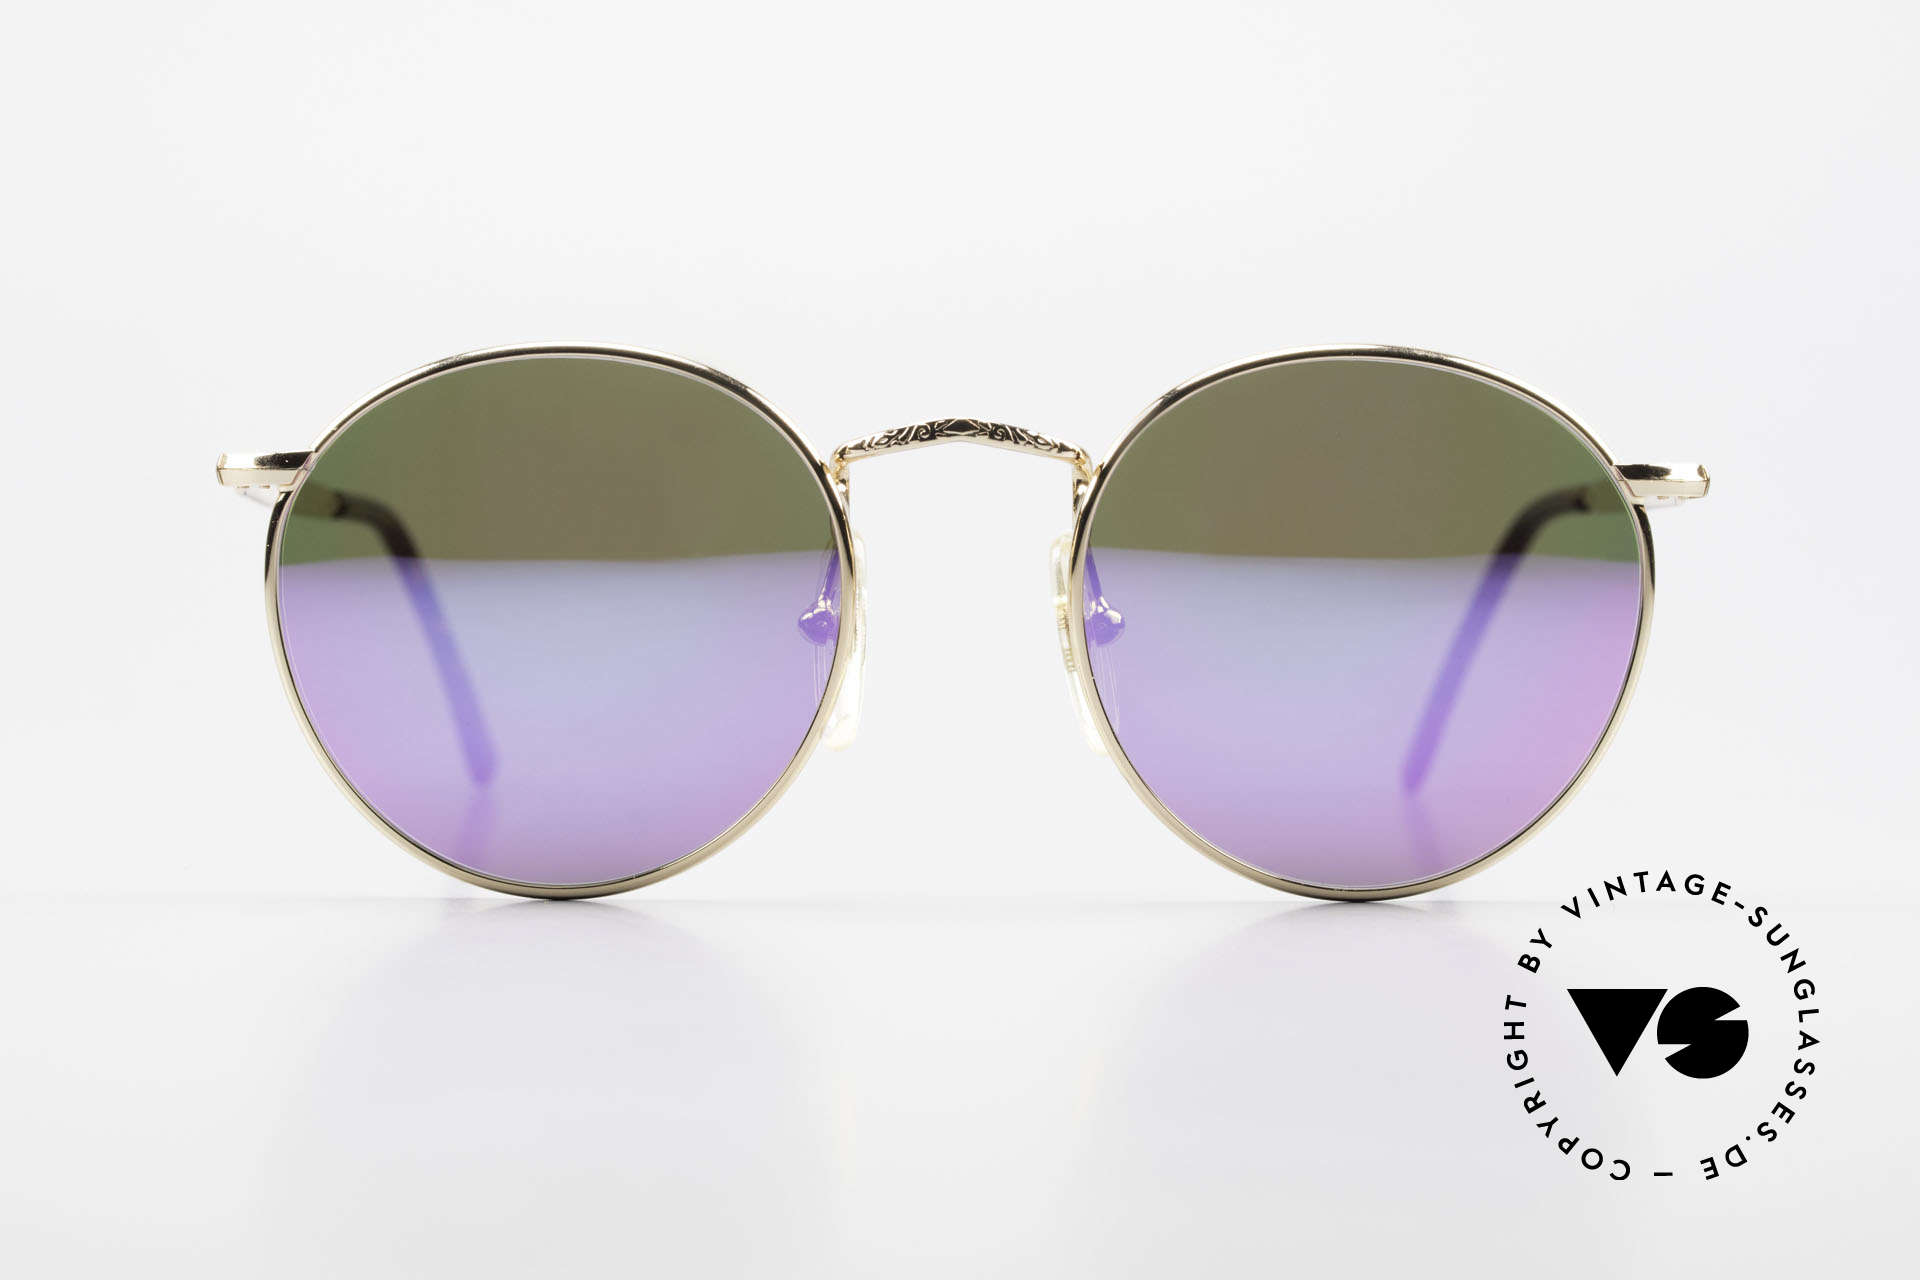 John Lennon - Imagine With Pink Mirrored Sun Lenses, model 'IMAGINE': panto sunglasses in small 49mm size, Made for Men and Women